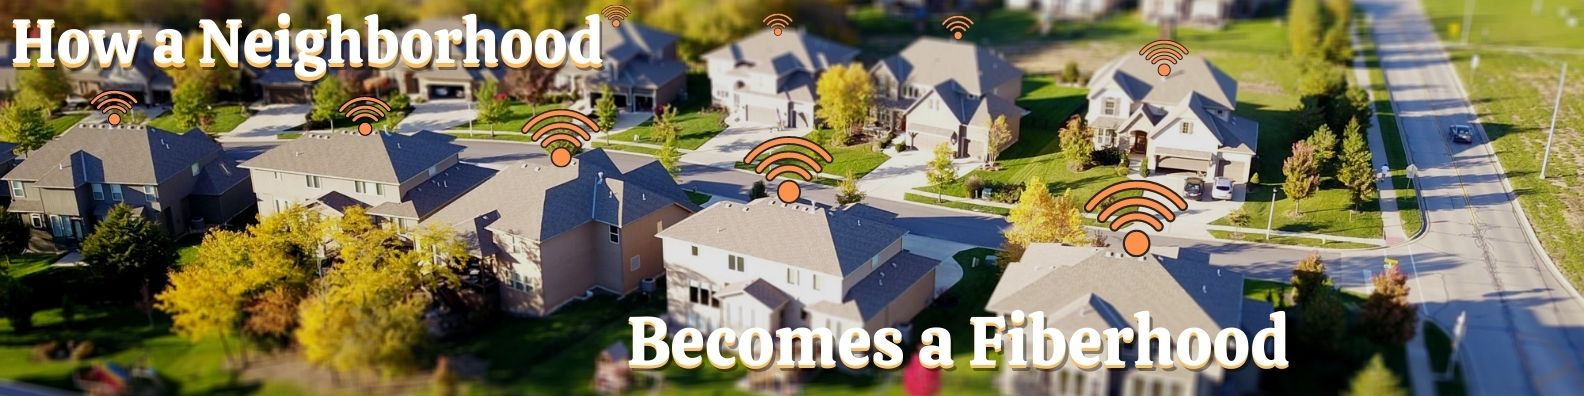 cute neighborhood with wifi signals placed over each house. Text reads "How a neighborhood becomes a fiberhood"